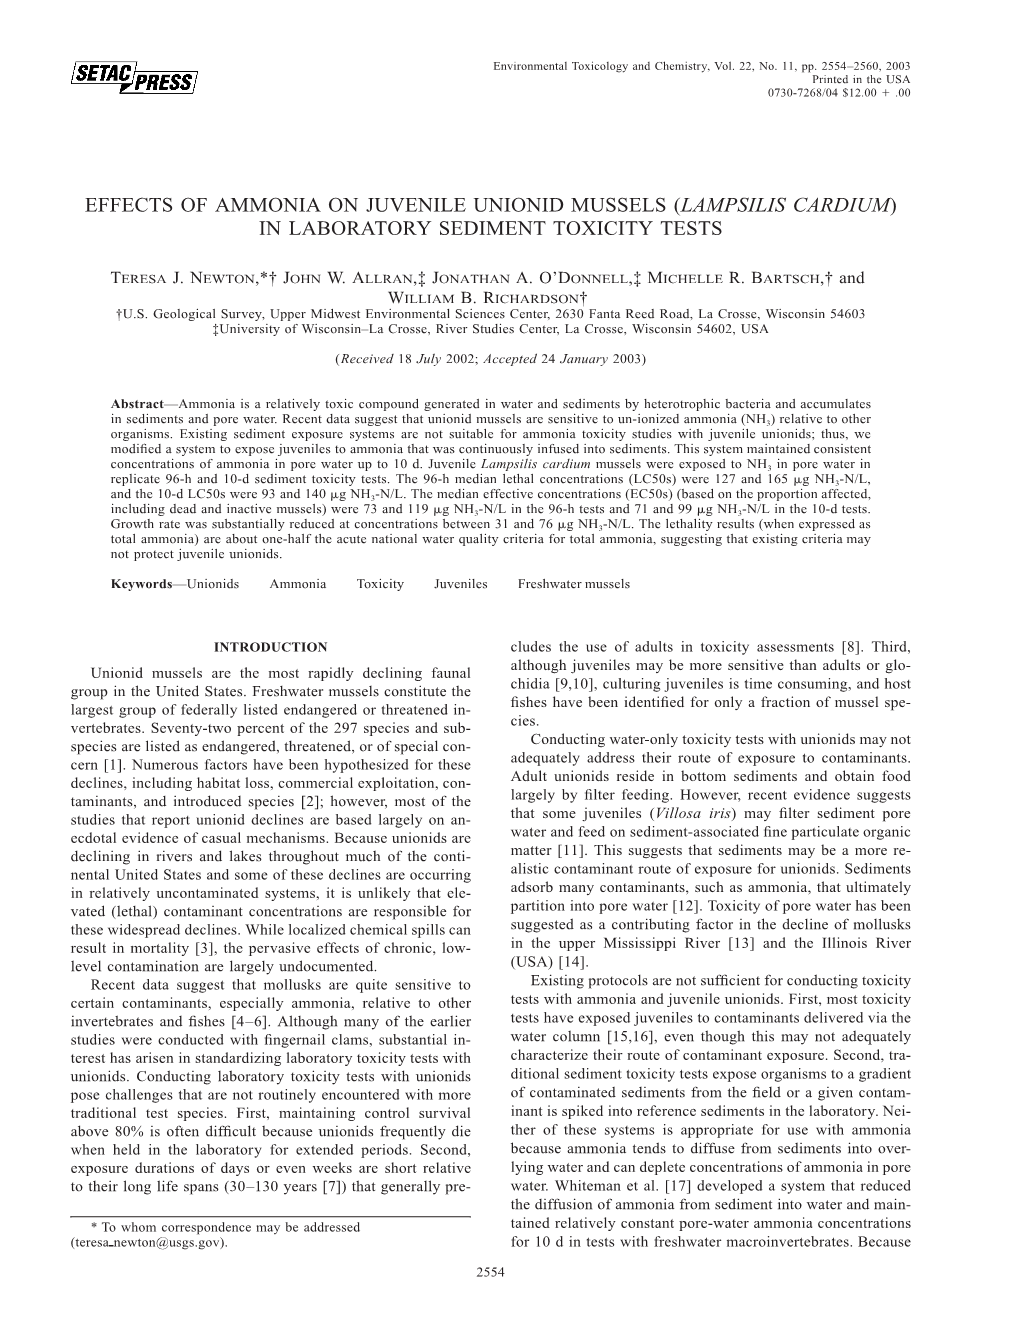 Effects of Ammonia on Juvenile Unionid Mussels (Lampsilis Cardium) in Laboratory Sediment Toxicity Tests